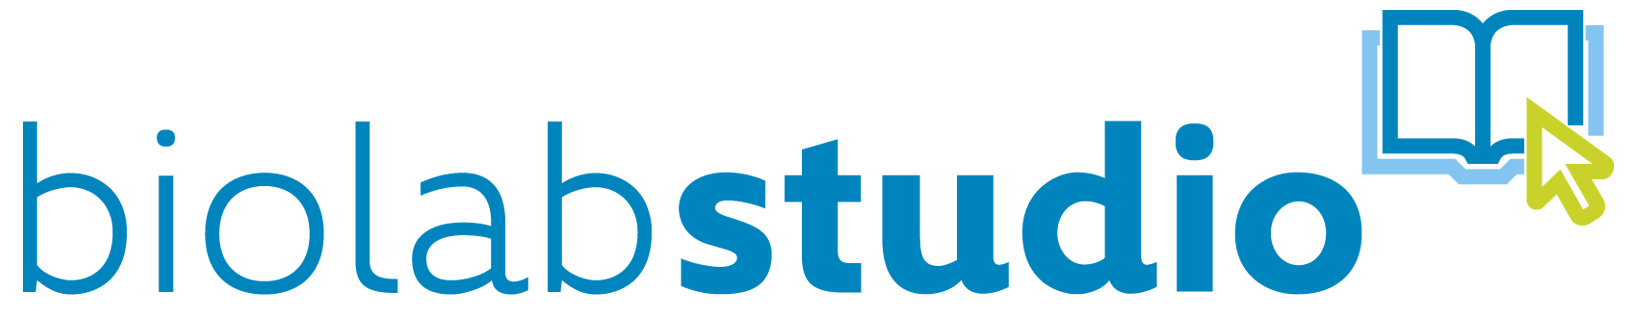 BiolabStudio logo